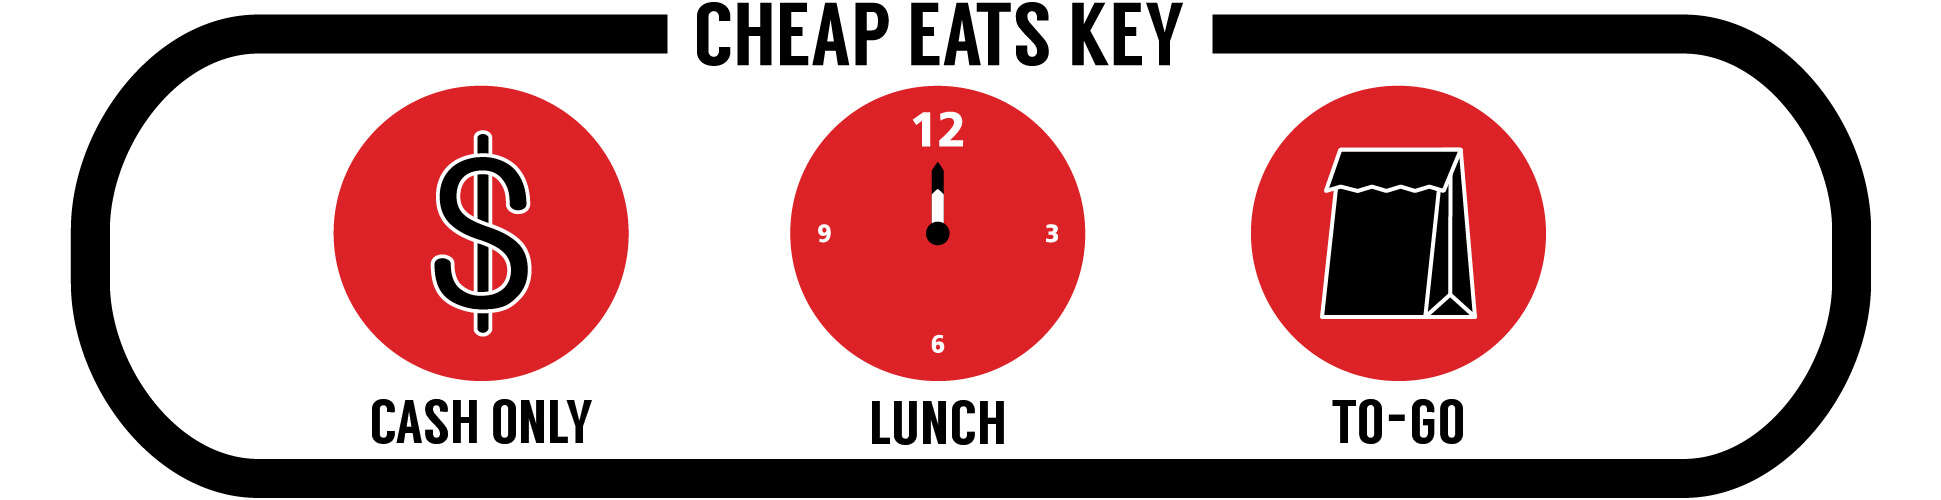 cheap eats key